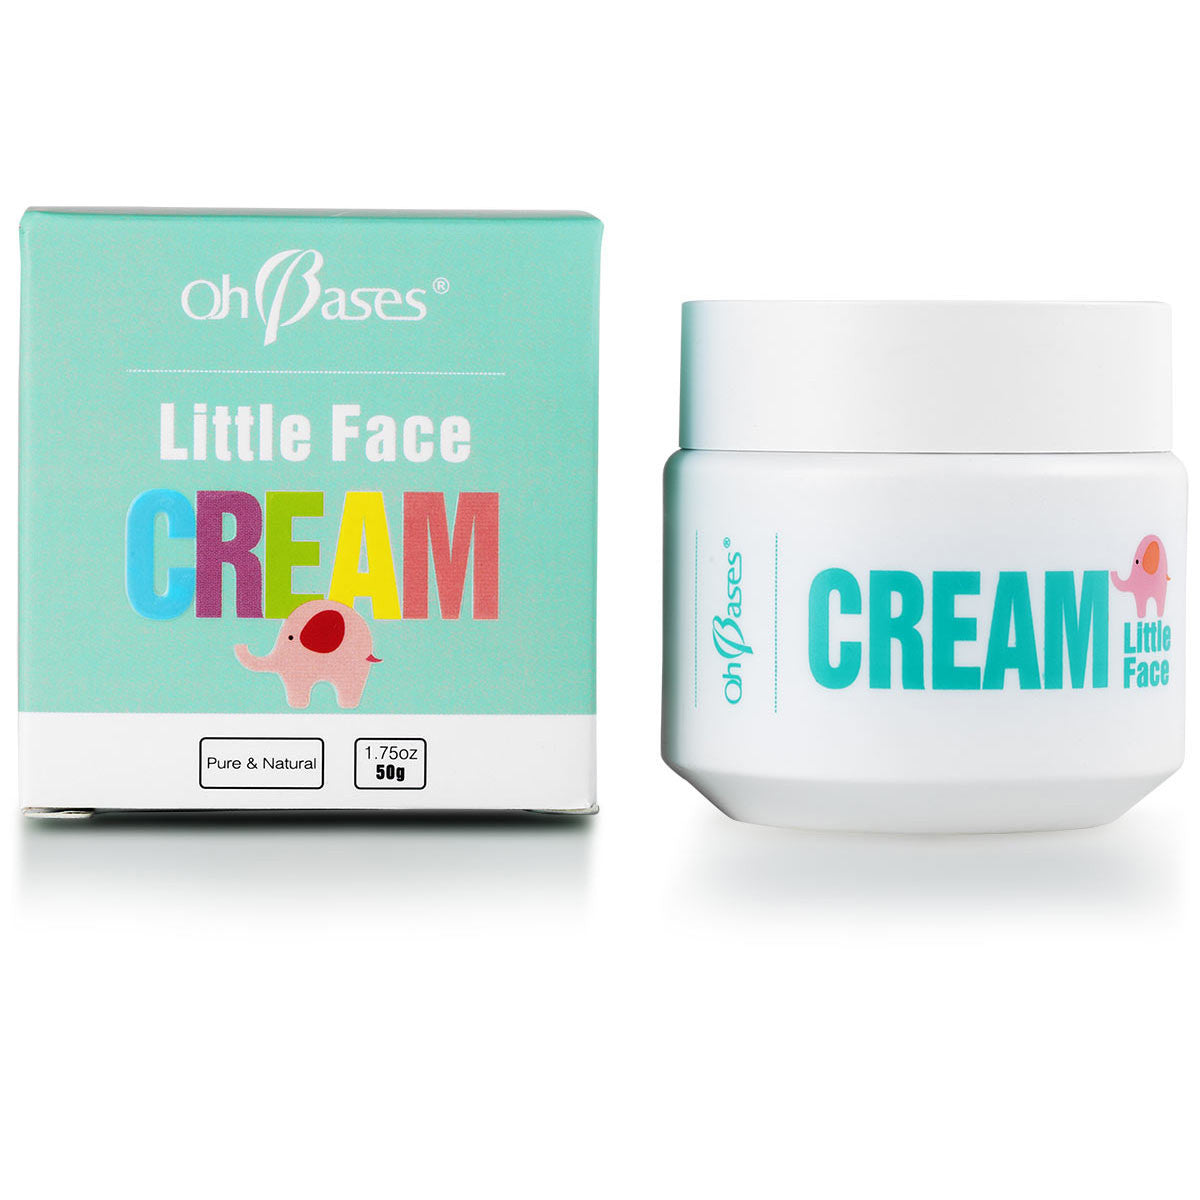 Little Face Cream - OhBases